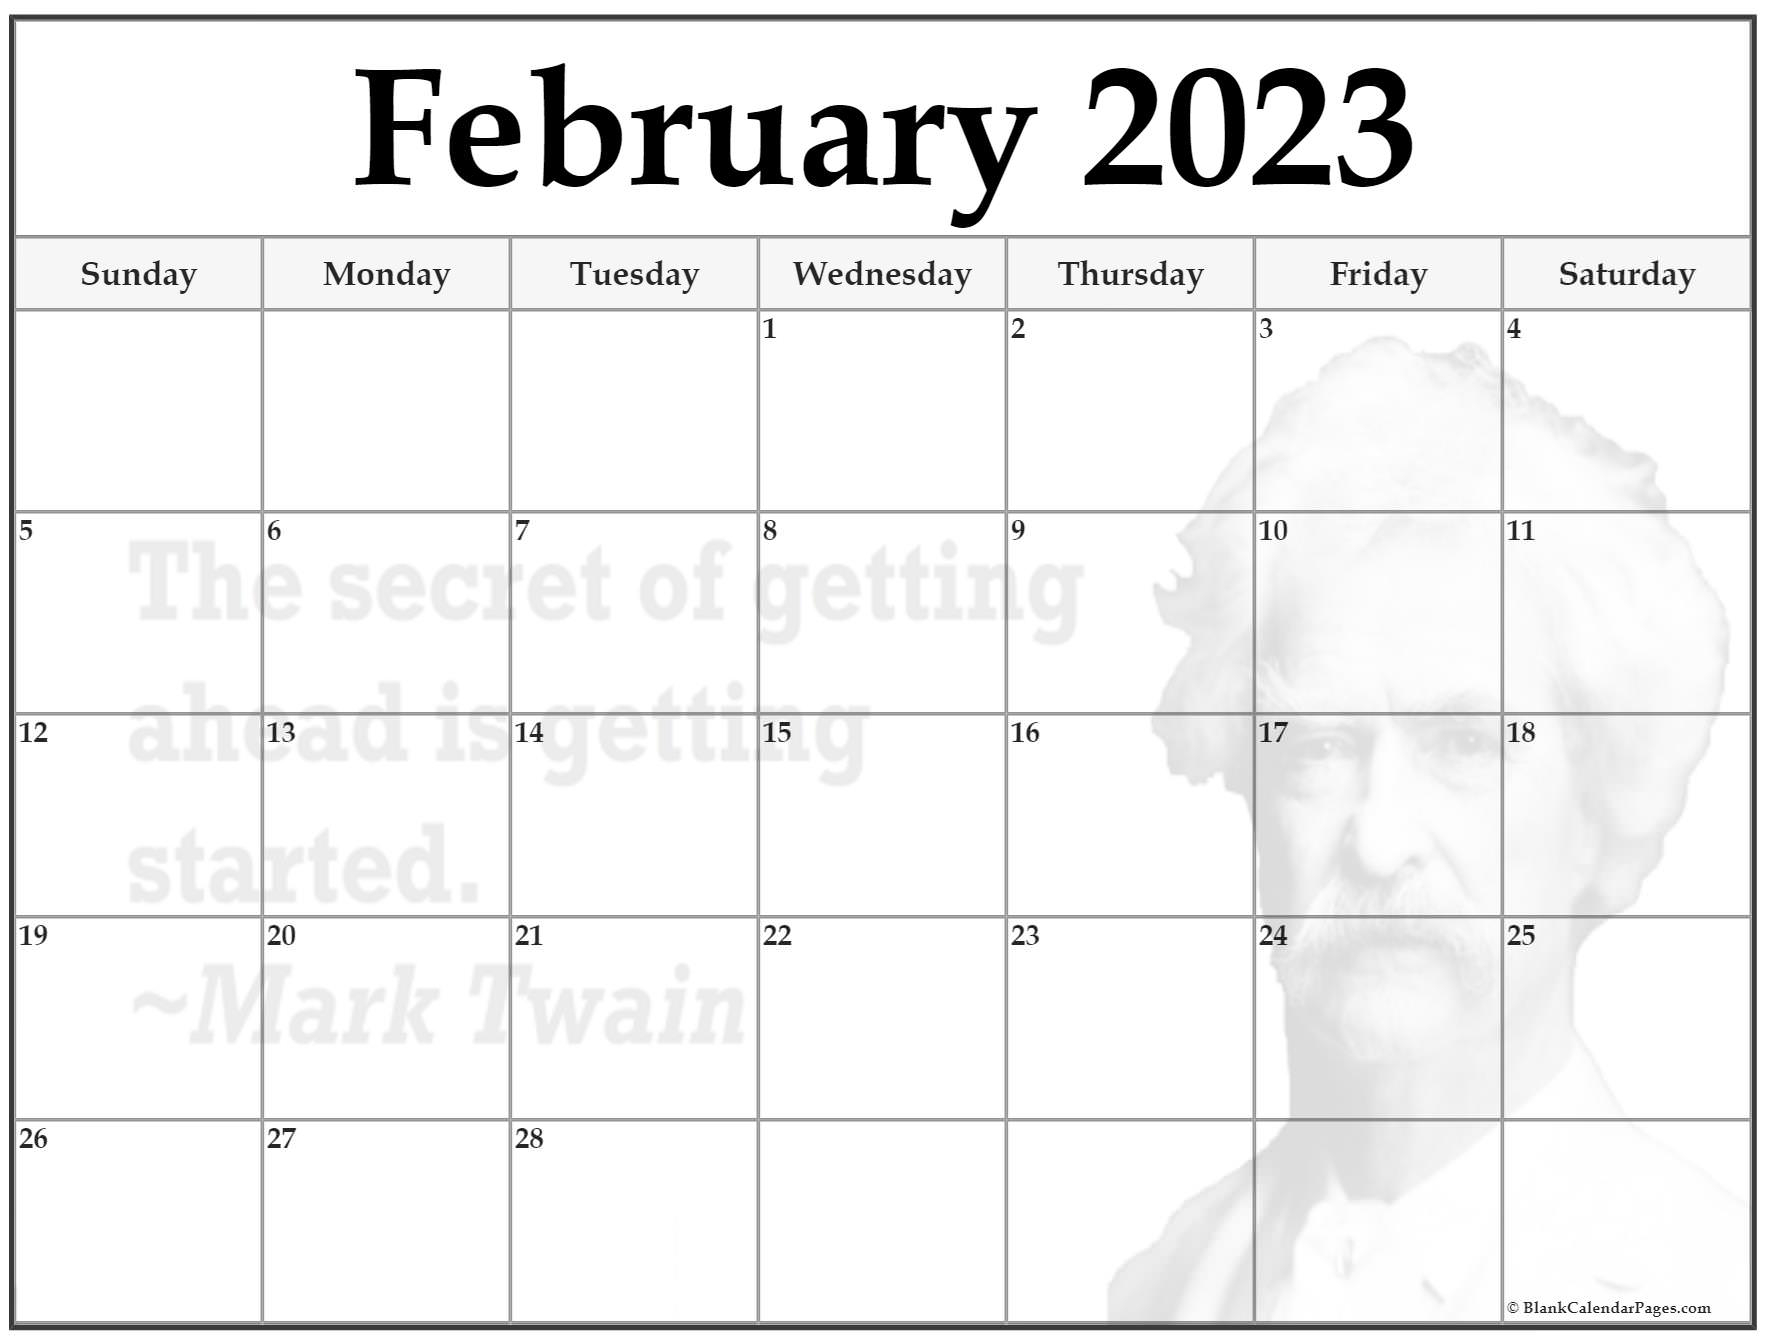 24 February 2023 Quote Calendars